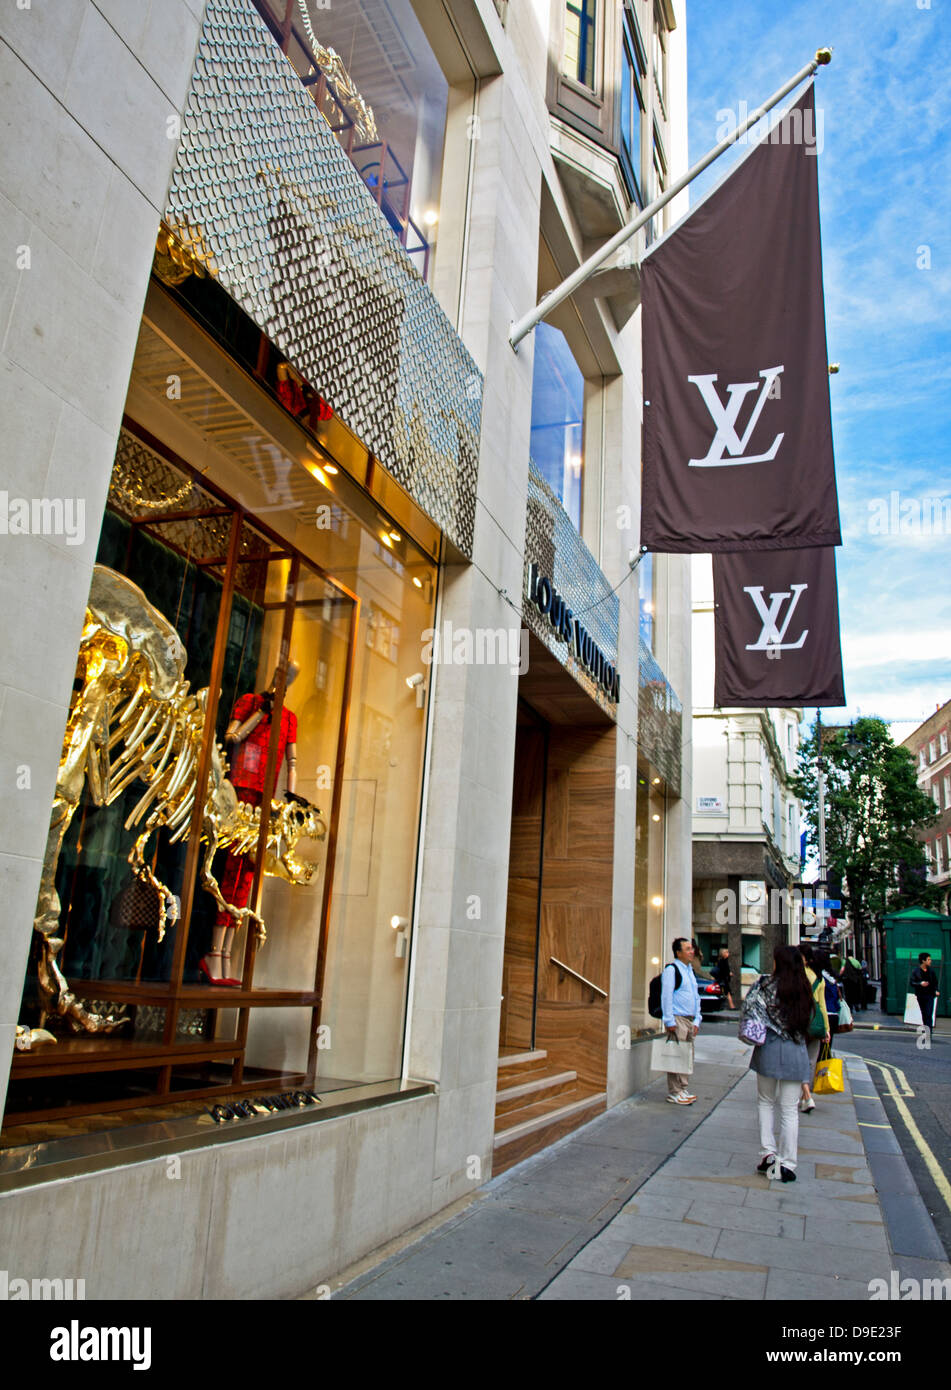 Louis Vuitton London New Bond Street with Talbot Design